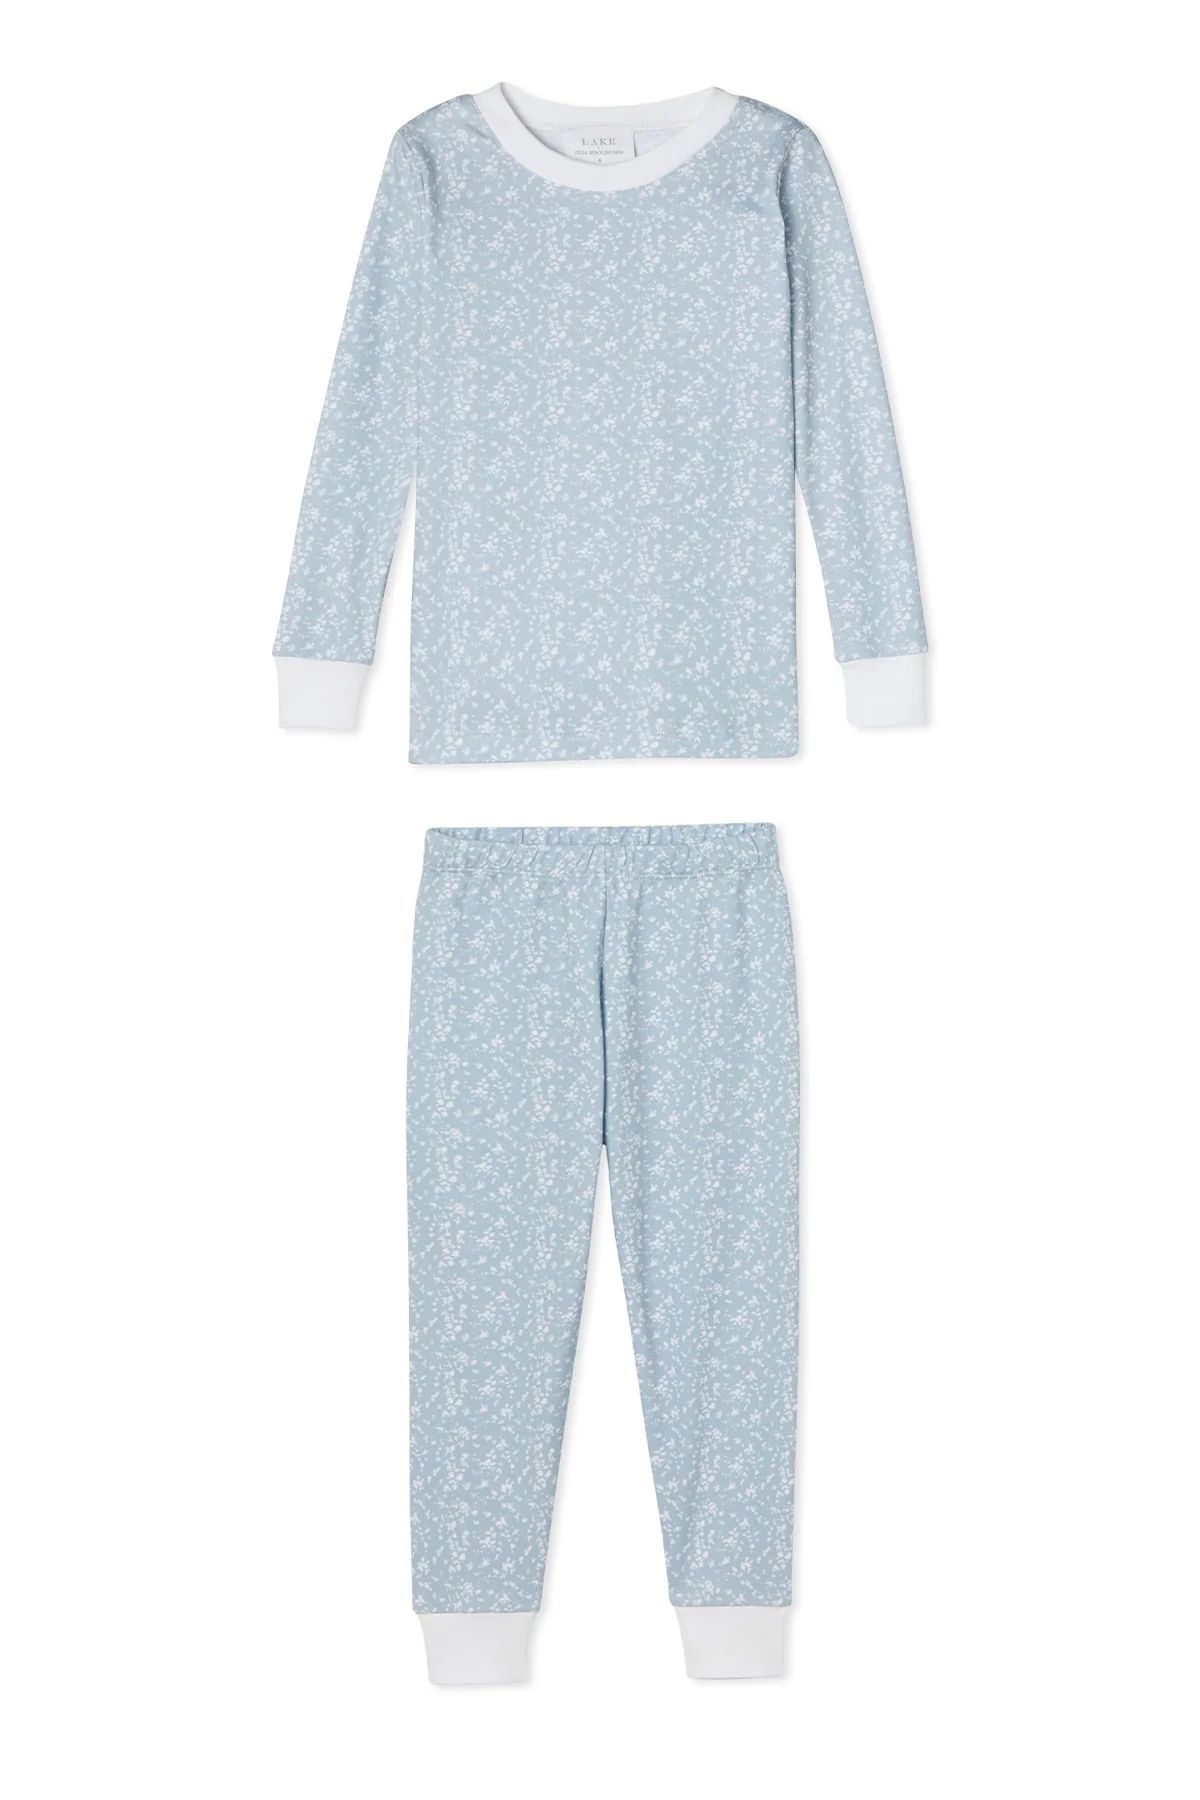 JB x LAKE Kids Long-Long Set in Blue Meadow | LAKE Pajamas